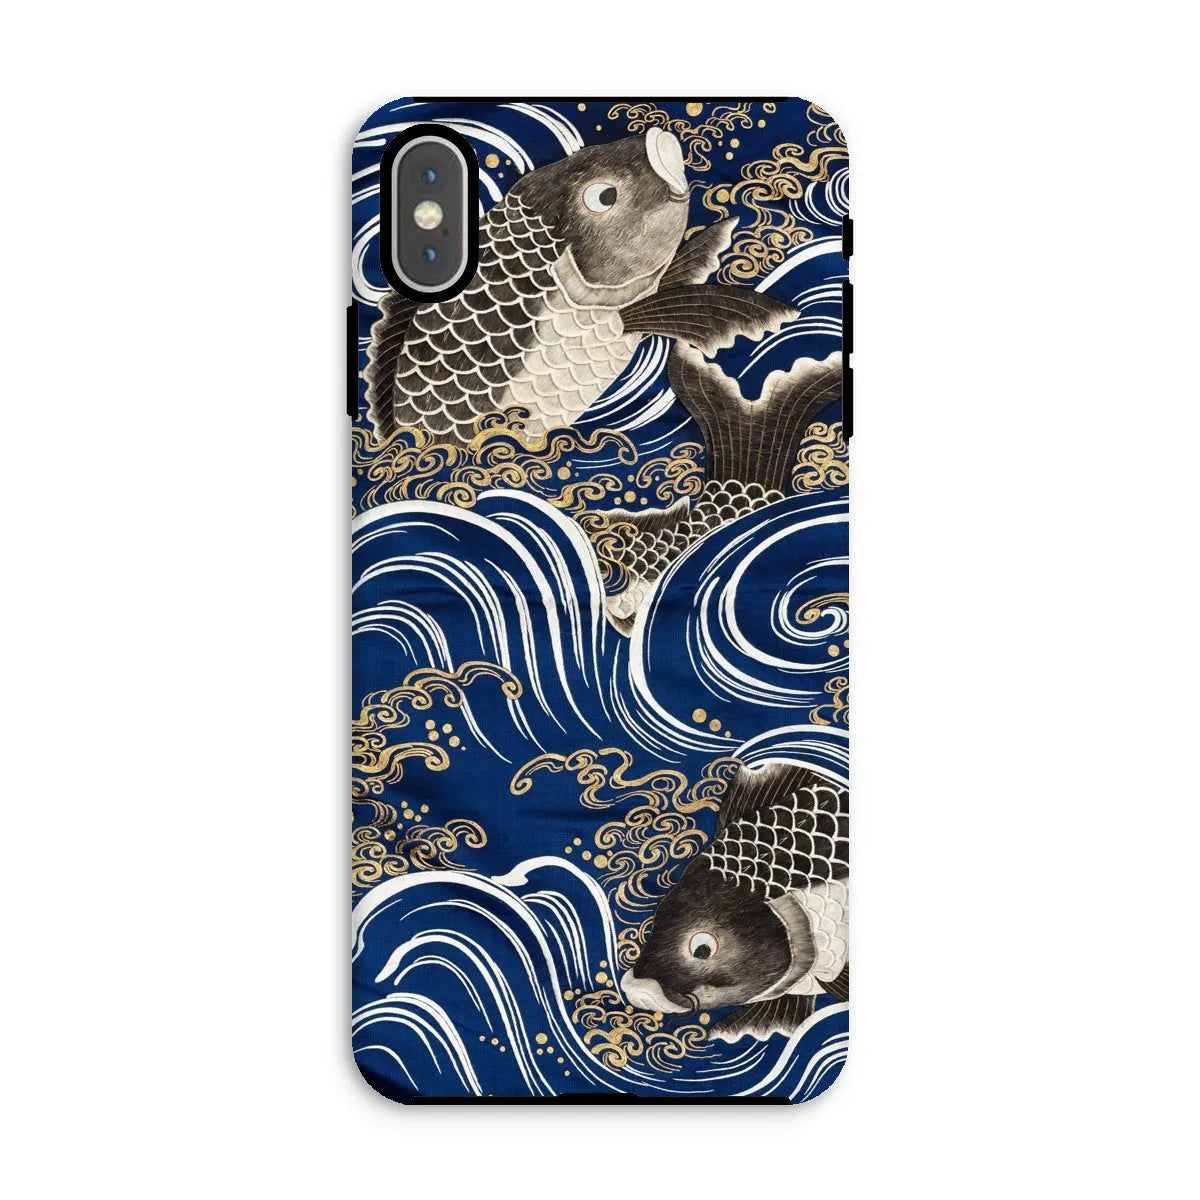 Fukusa And Carp - Japanese Meiji Period Art Phone Case - Iphone Xs Max / Matte - Mobile Phone Cases - Aesthetic Art